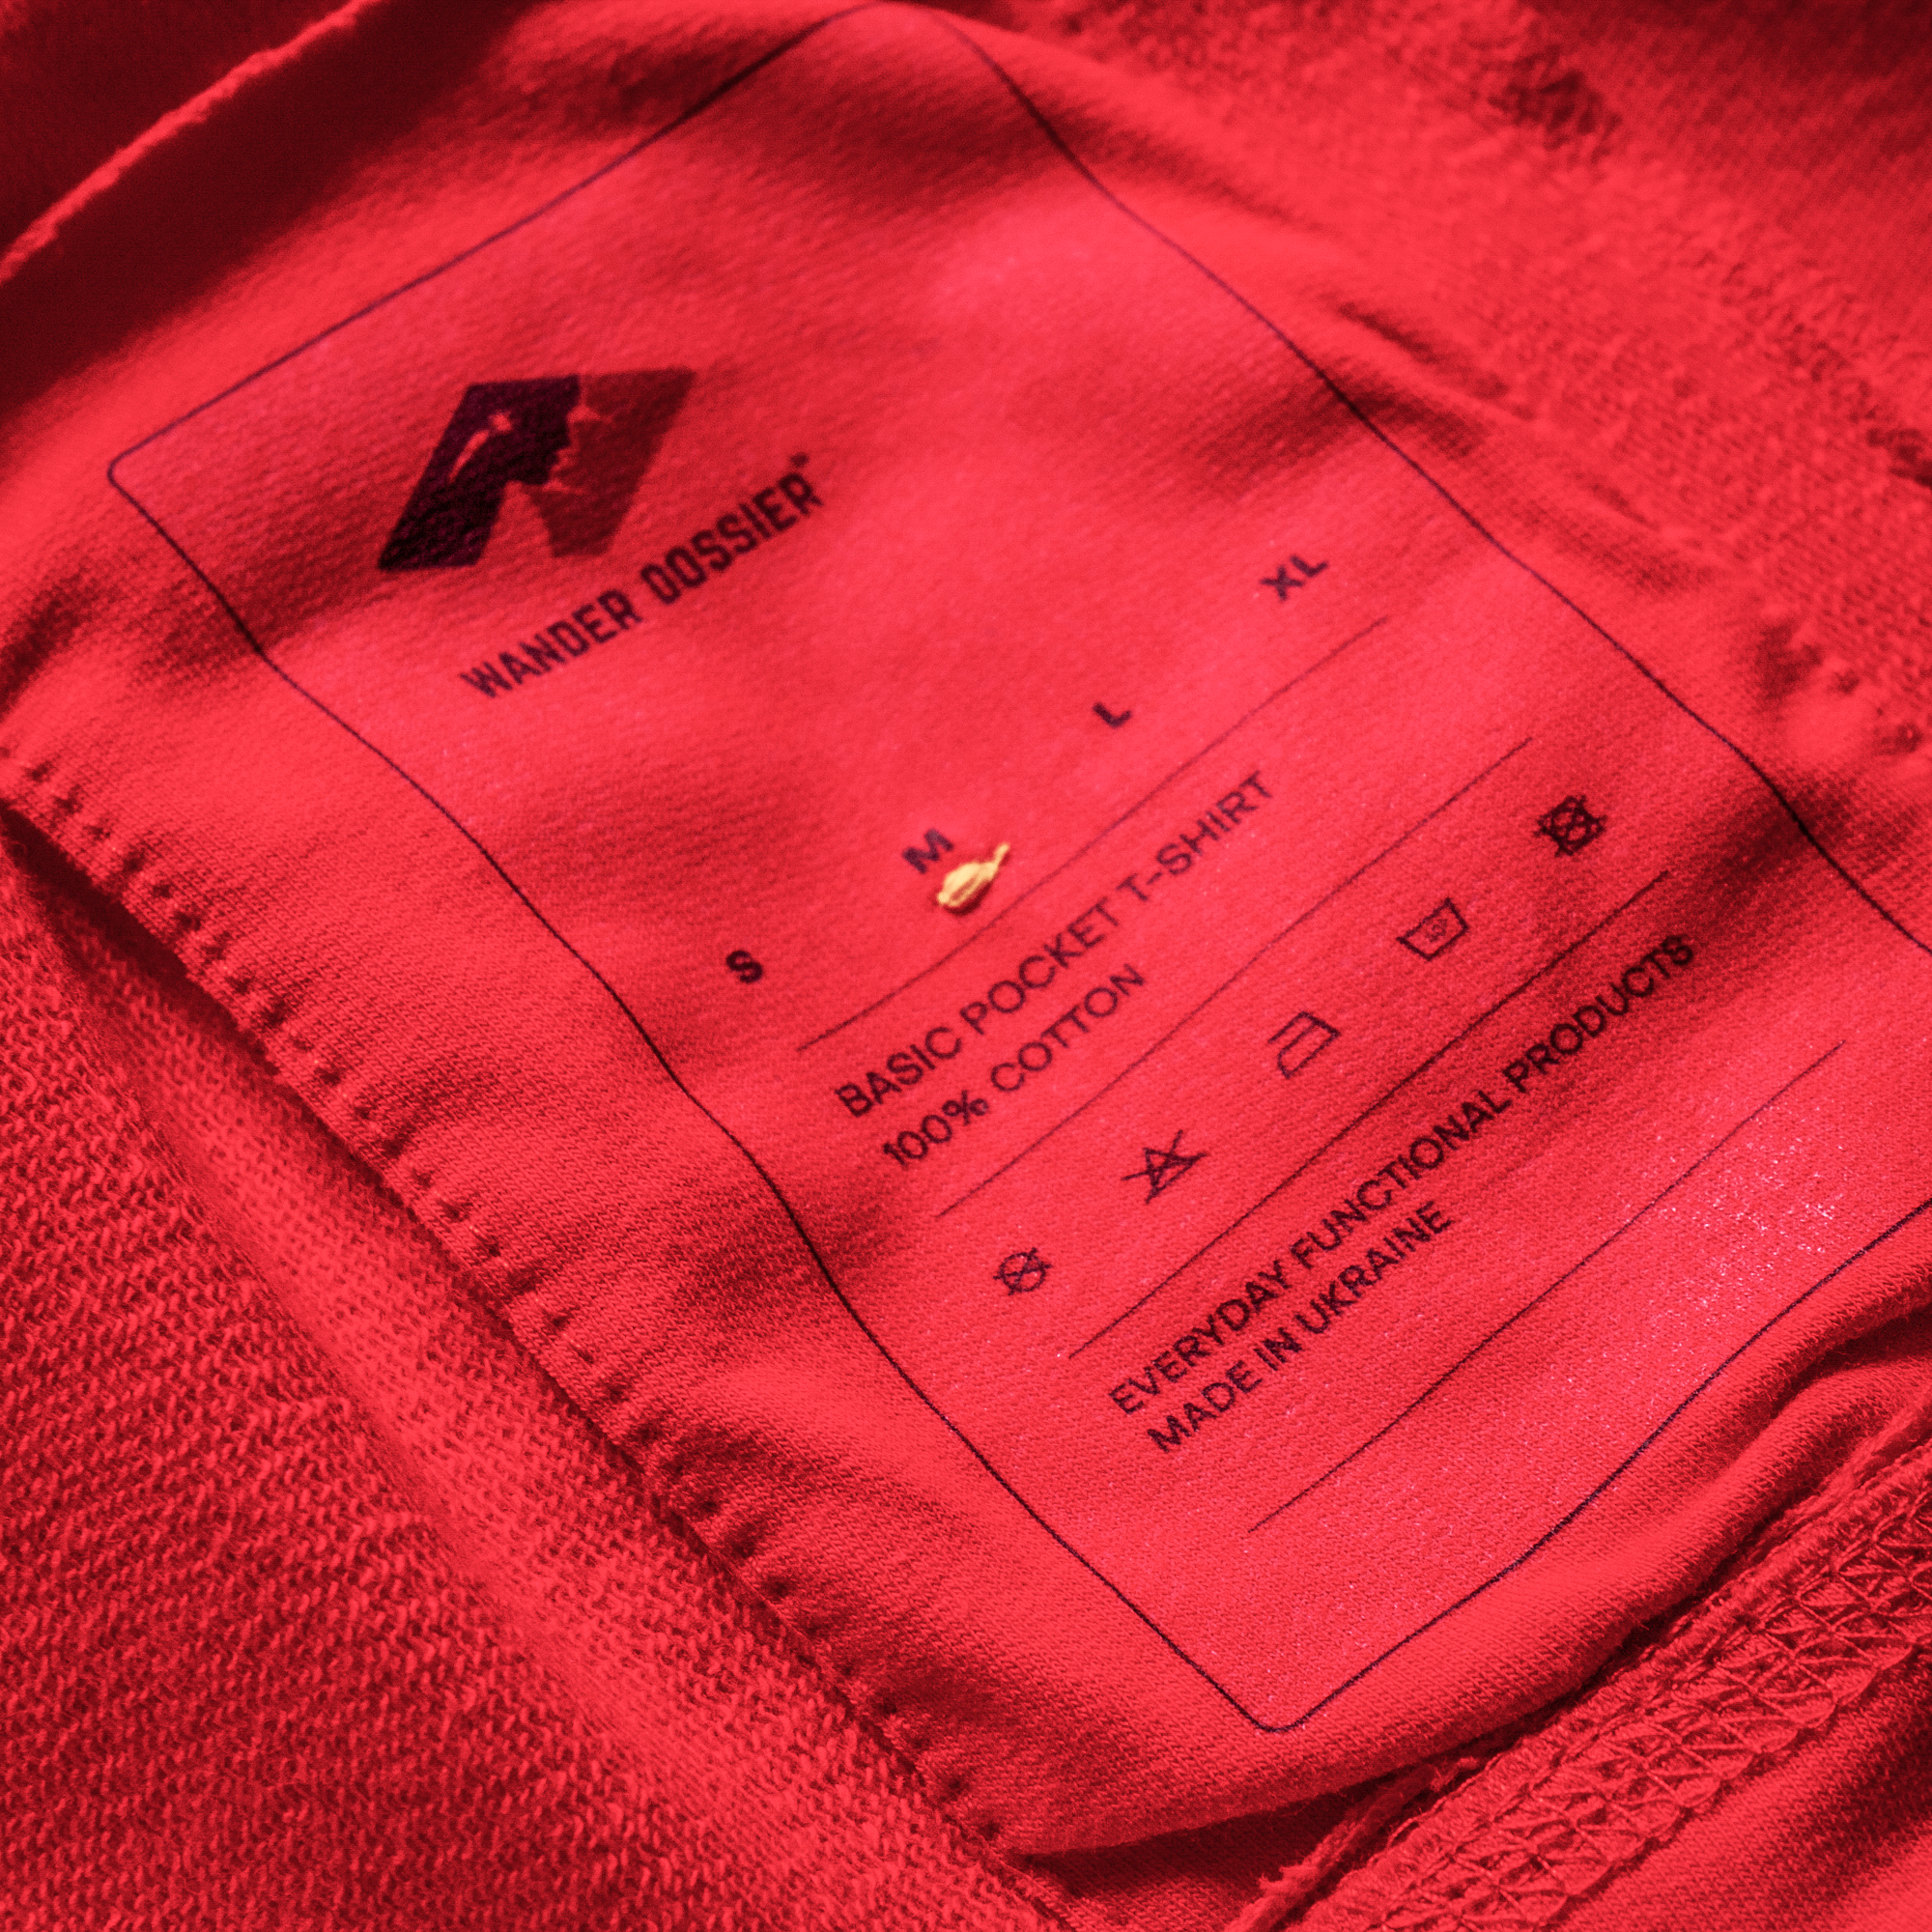 Basic Pocket T-Shirt (in Red)